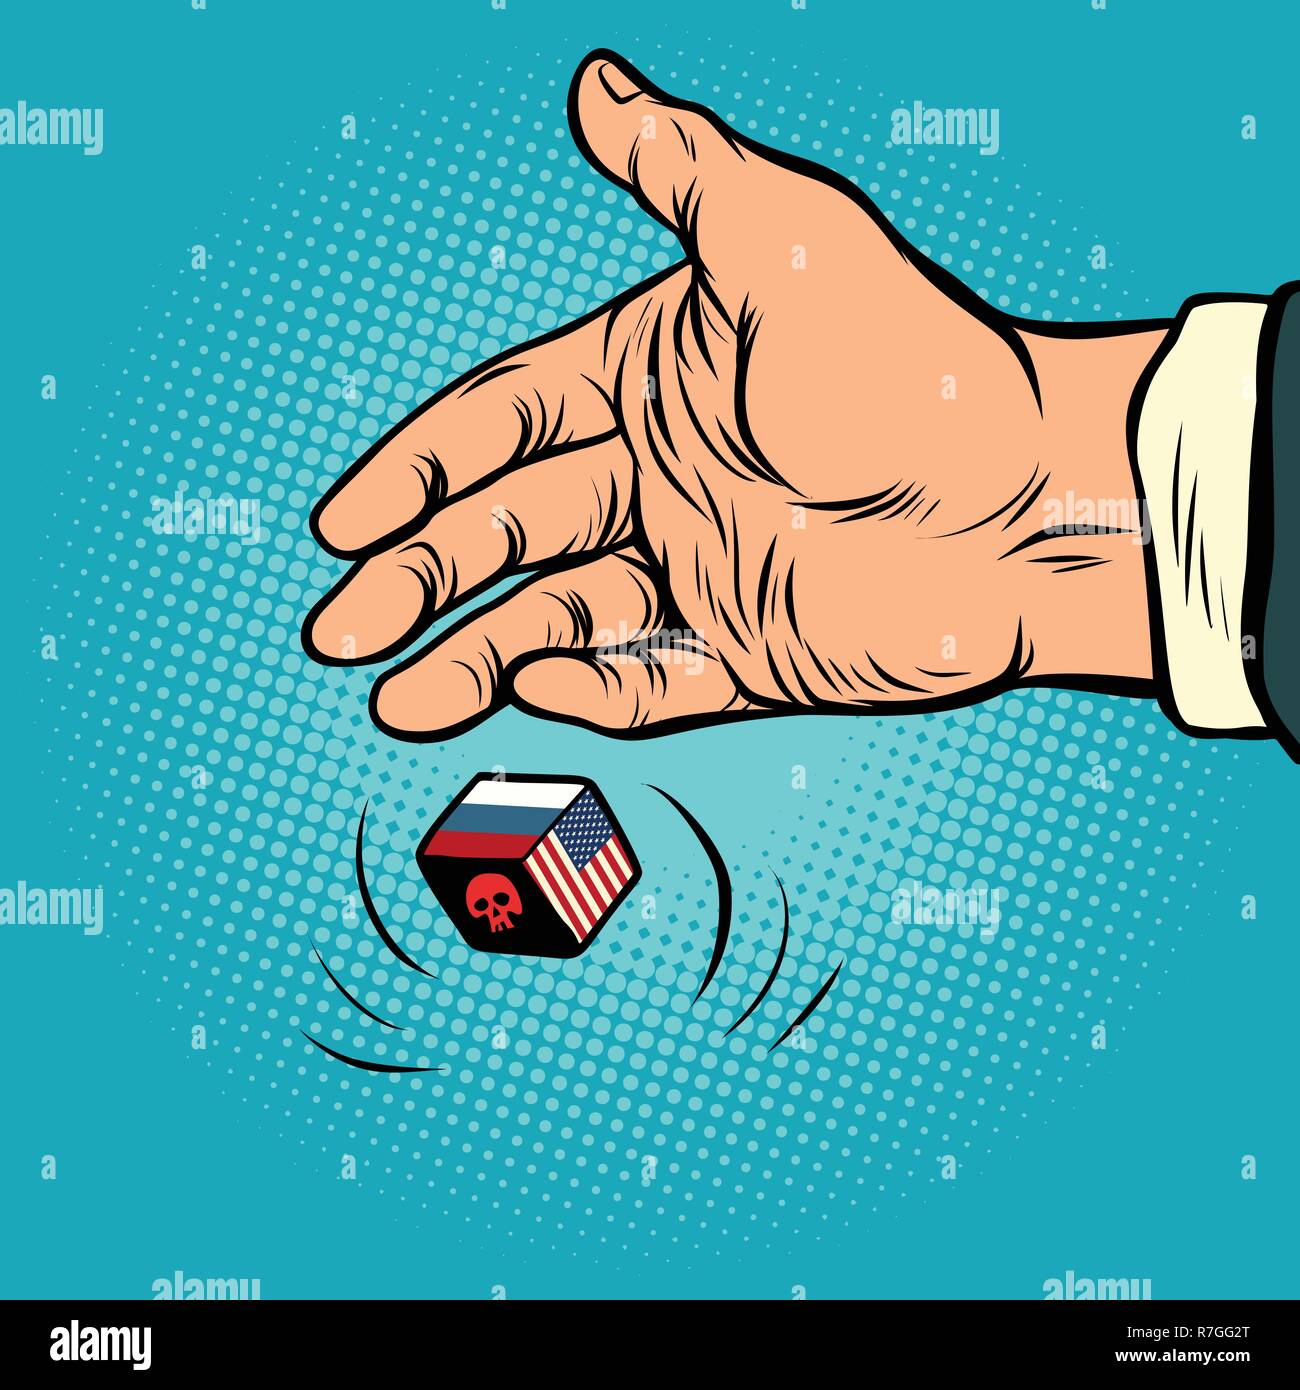 Politics russia and usa confrontation. hand throws dice. Comic cartoon pop art retro vector illustration drawing Stock Vector